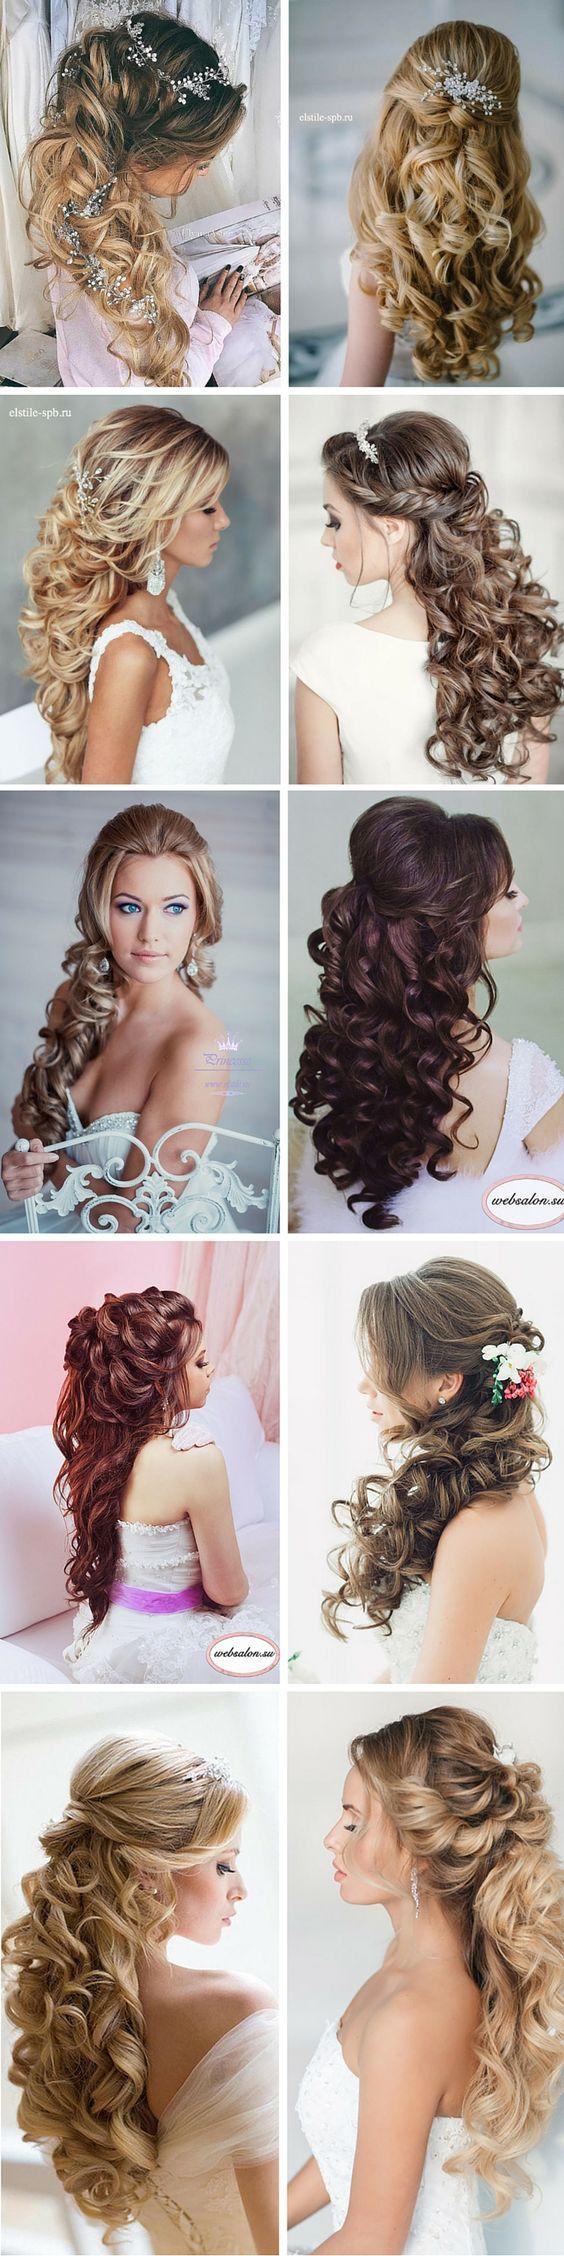 زفاف - 200 Bridal Wedding Hairstyles For Long Hair That Will Inspire